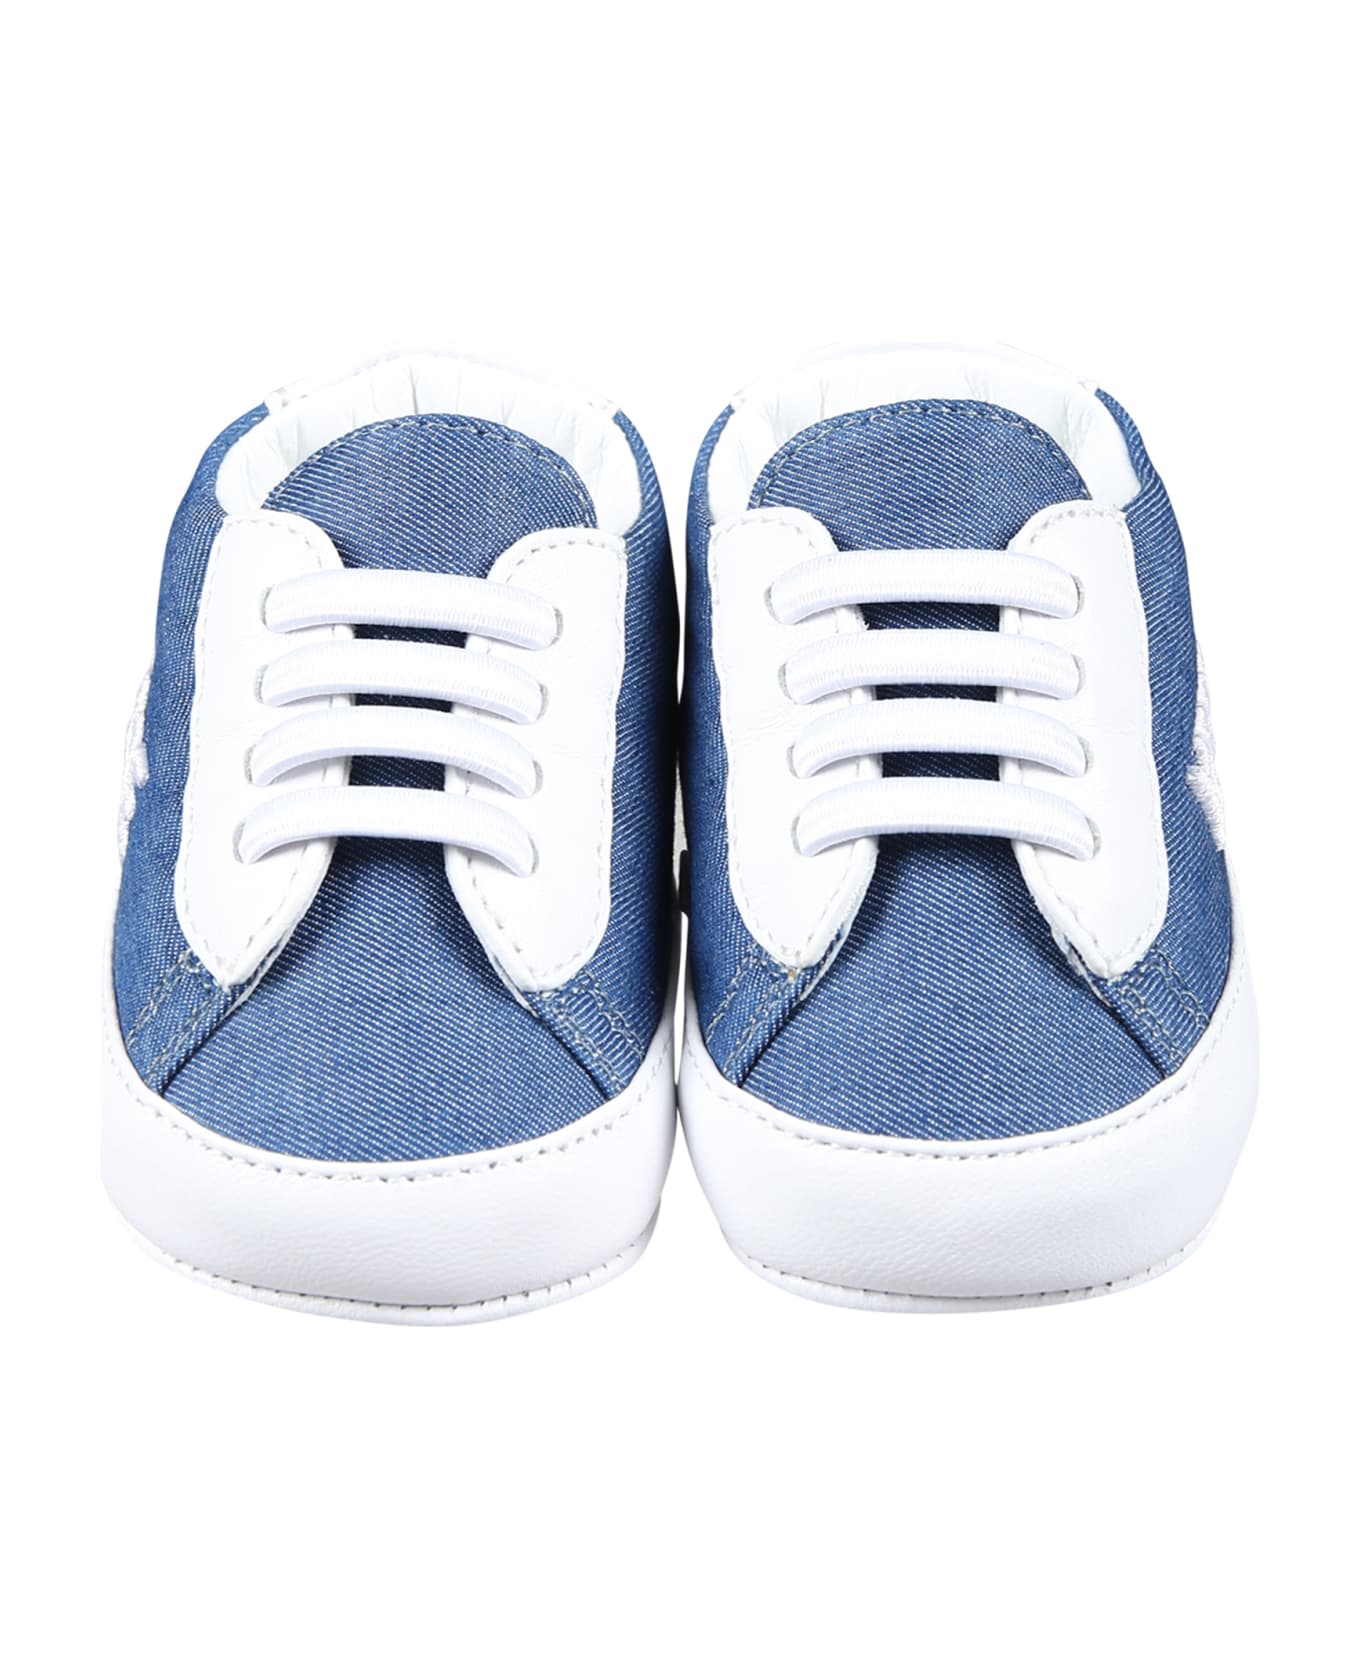 Versace Denim Sneakers For Babies With Logo - Denim